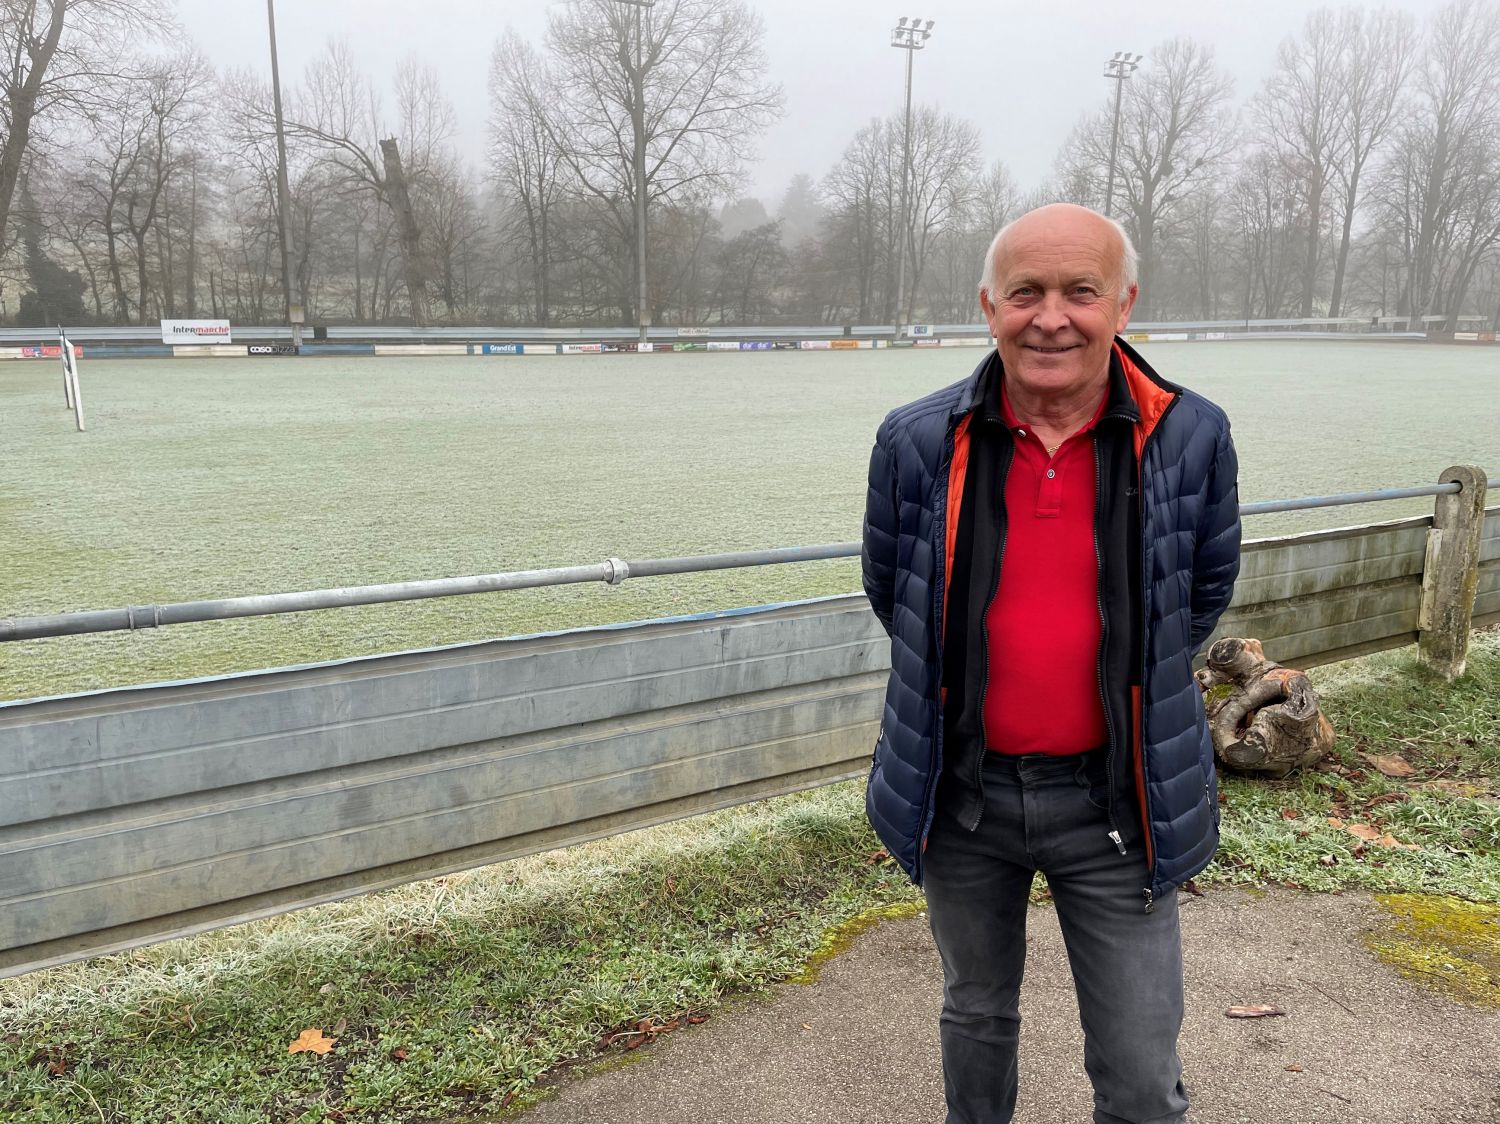 De Sarre-Union à Sarreguemines, la passion football de <br />
Roudy Keller 